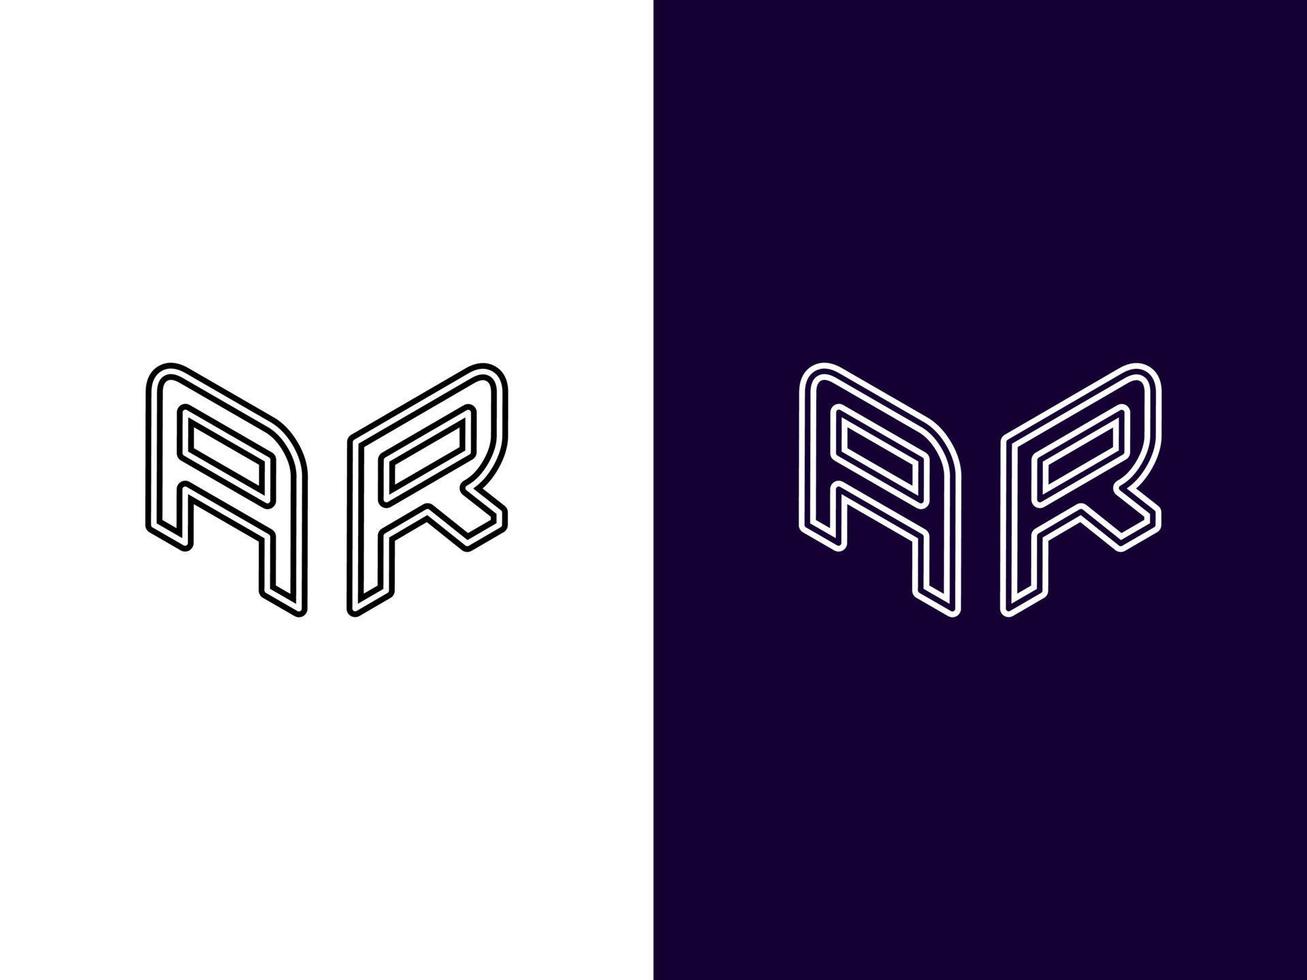 Initial letter AR minimalist and modern 3D logo design vector